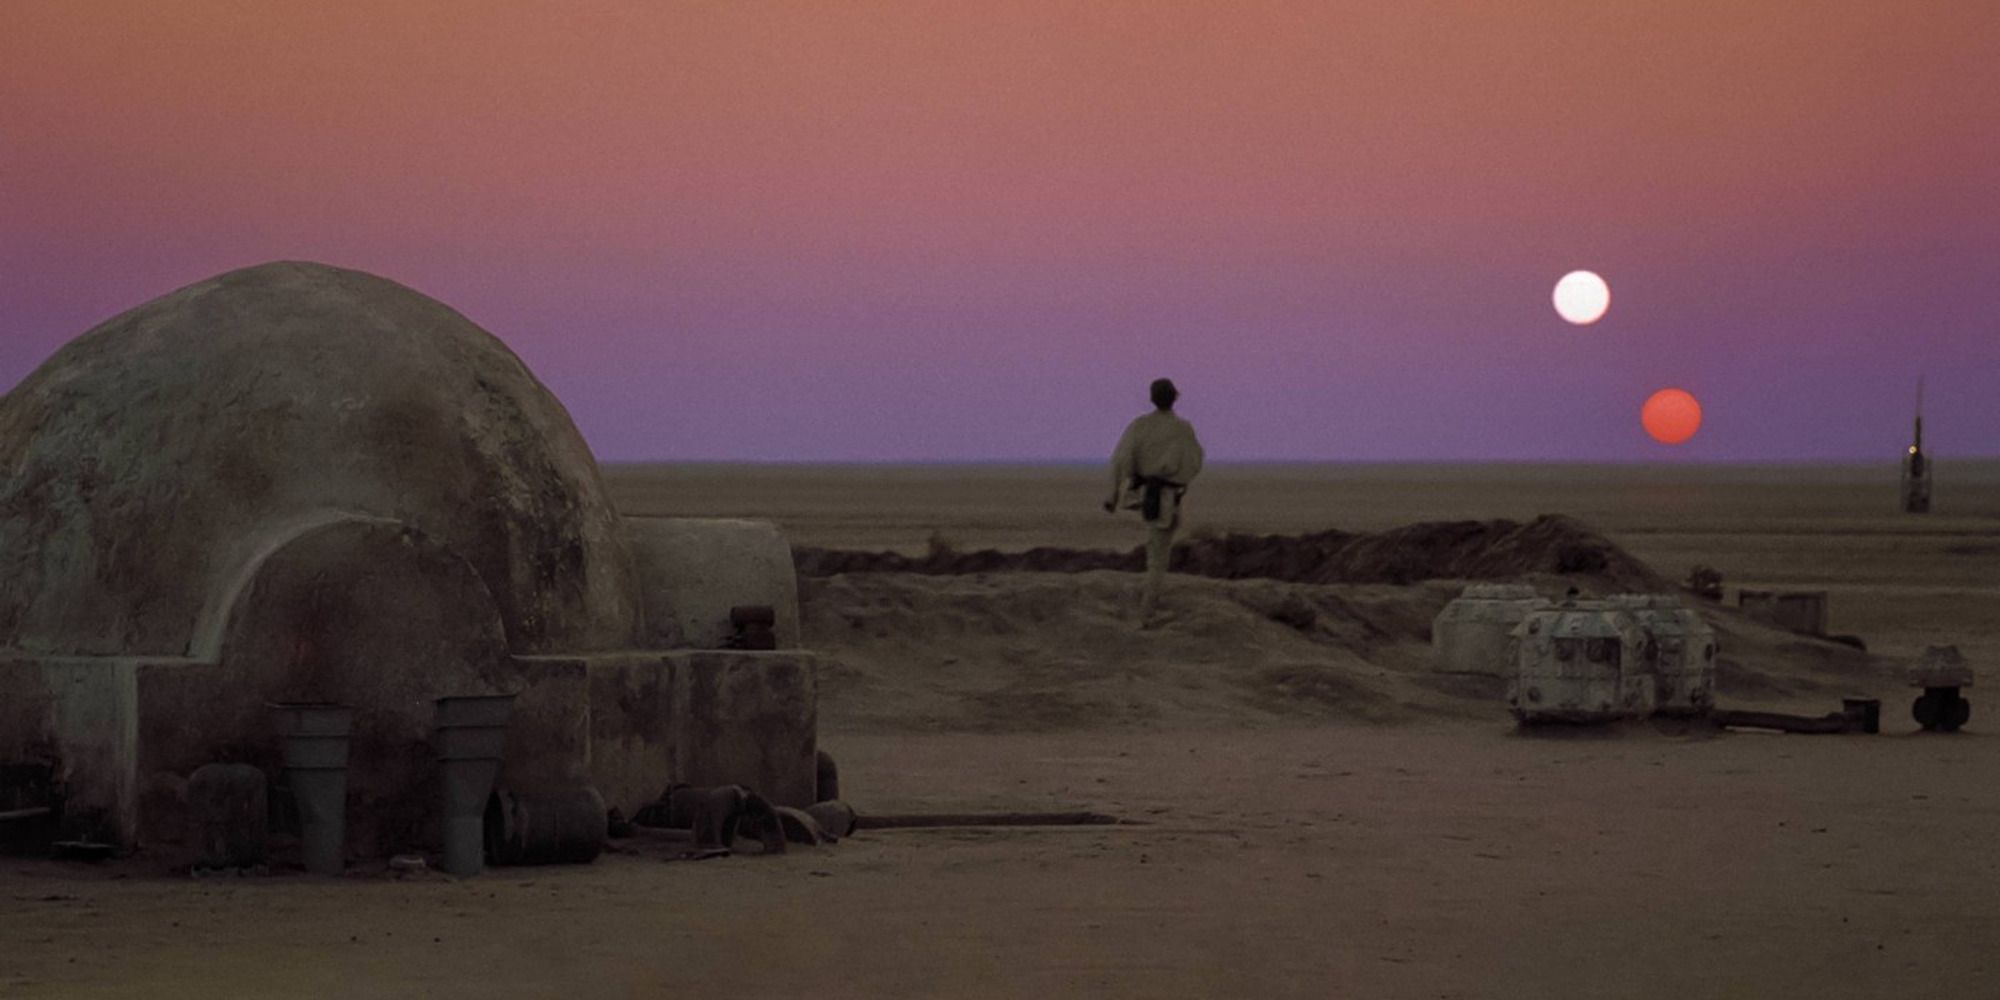 In Star Wars, two suns set over the horizon of an alien desert planet